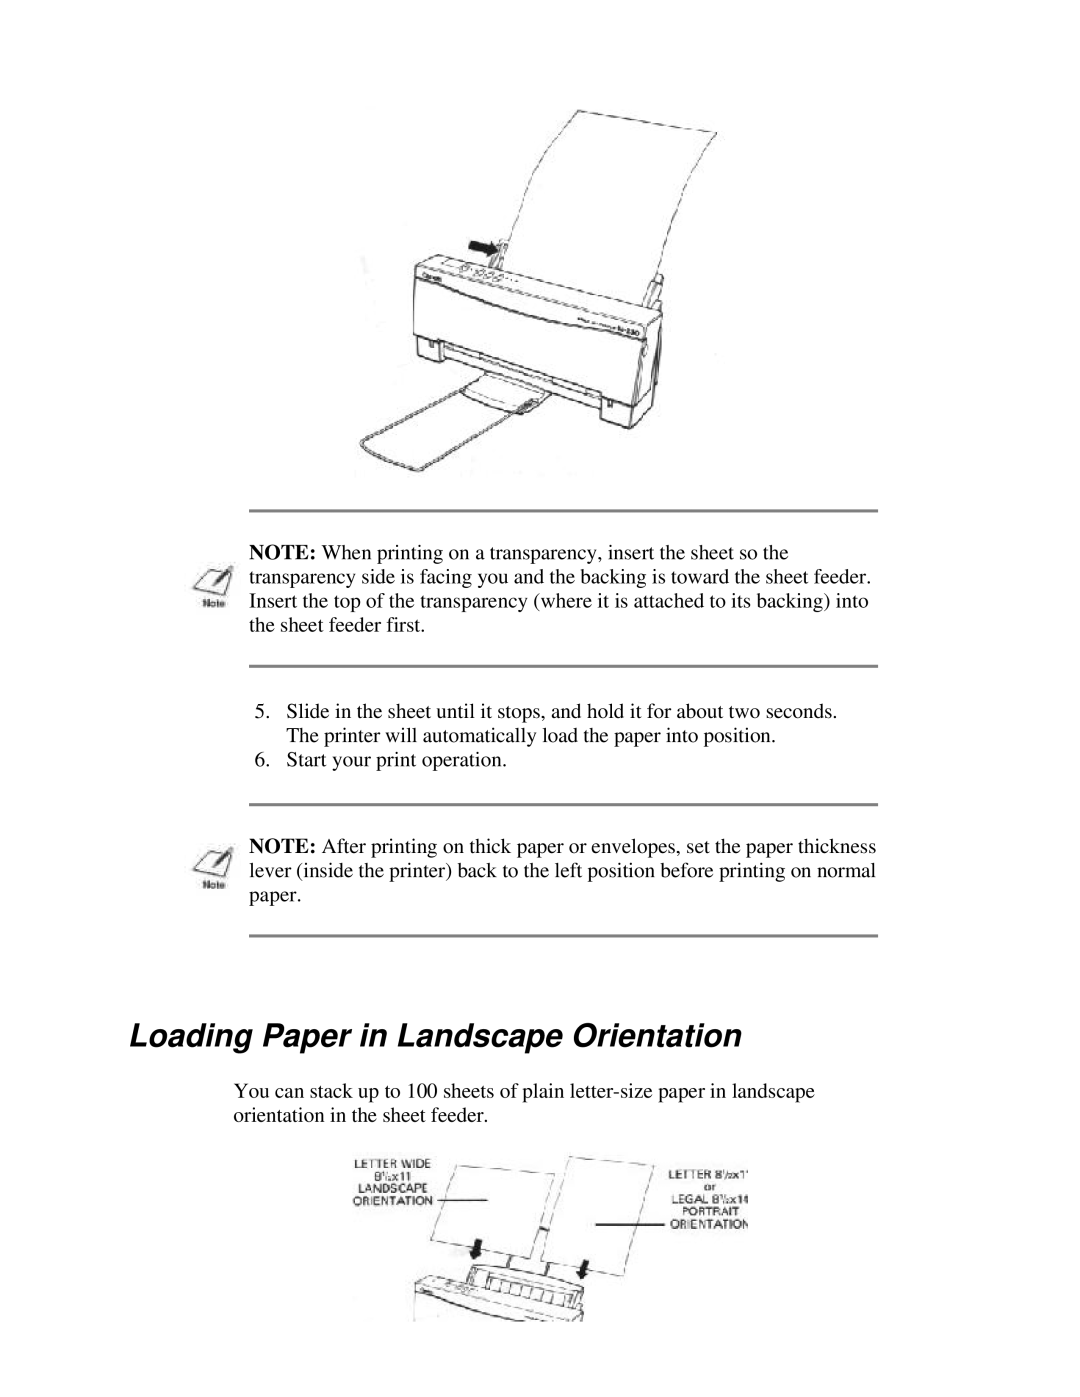 Canon BJ-230 user manual Loading Paper in Landscape Orientation 